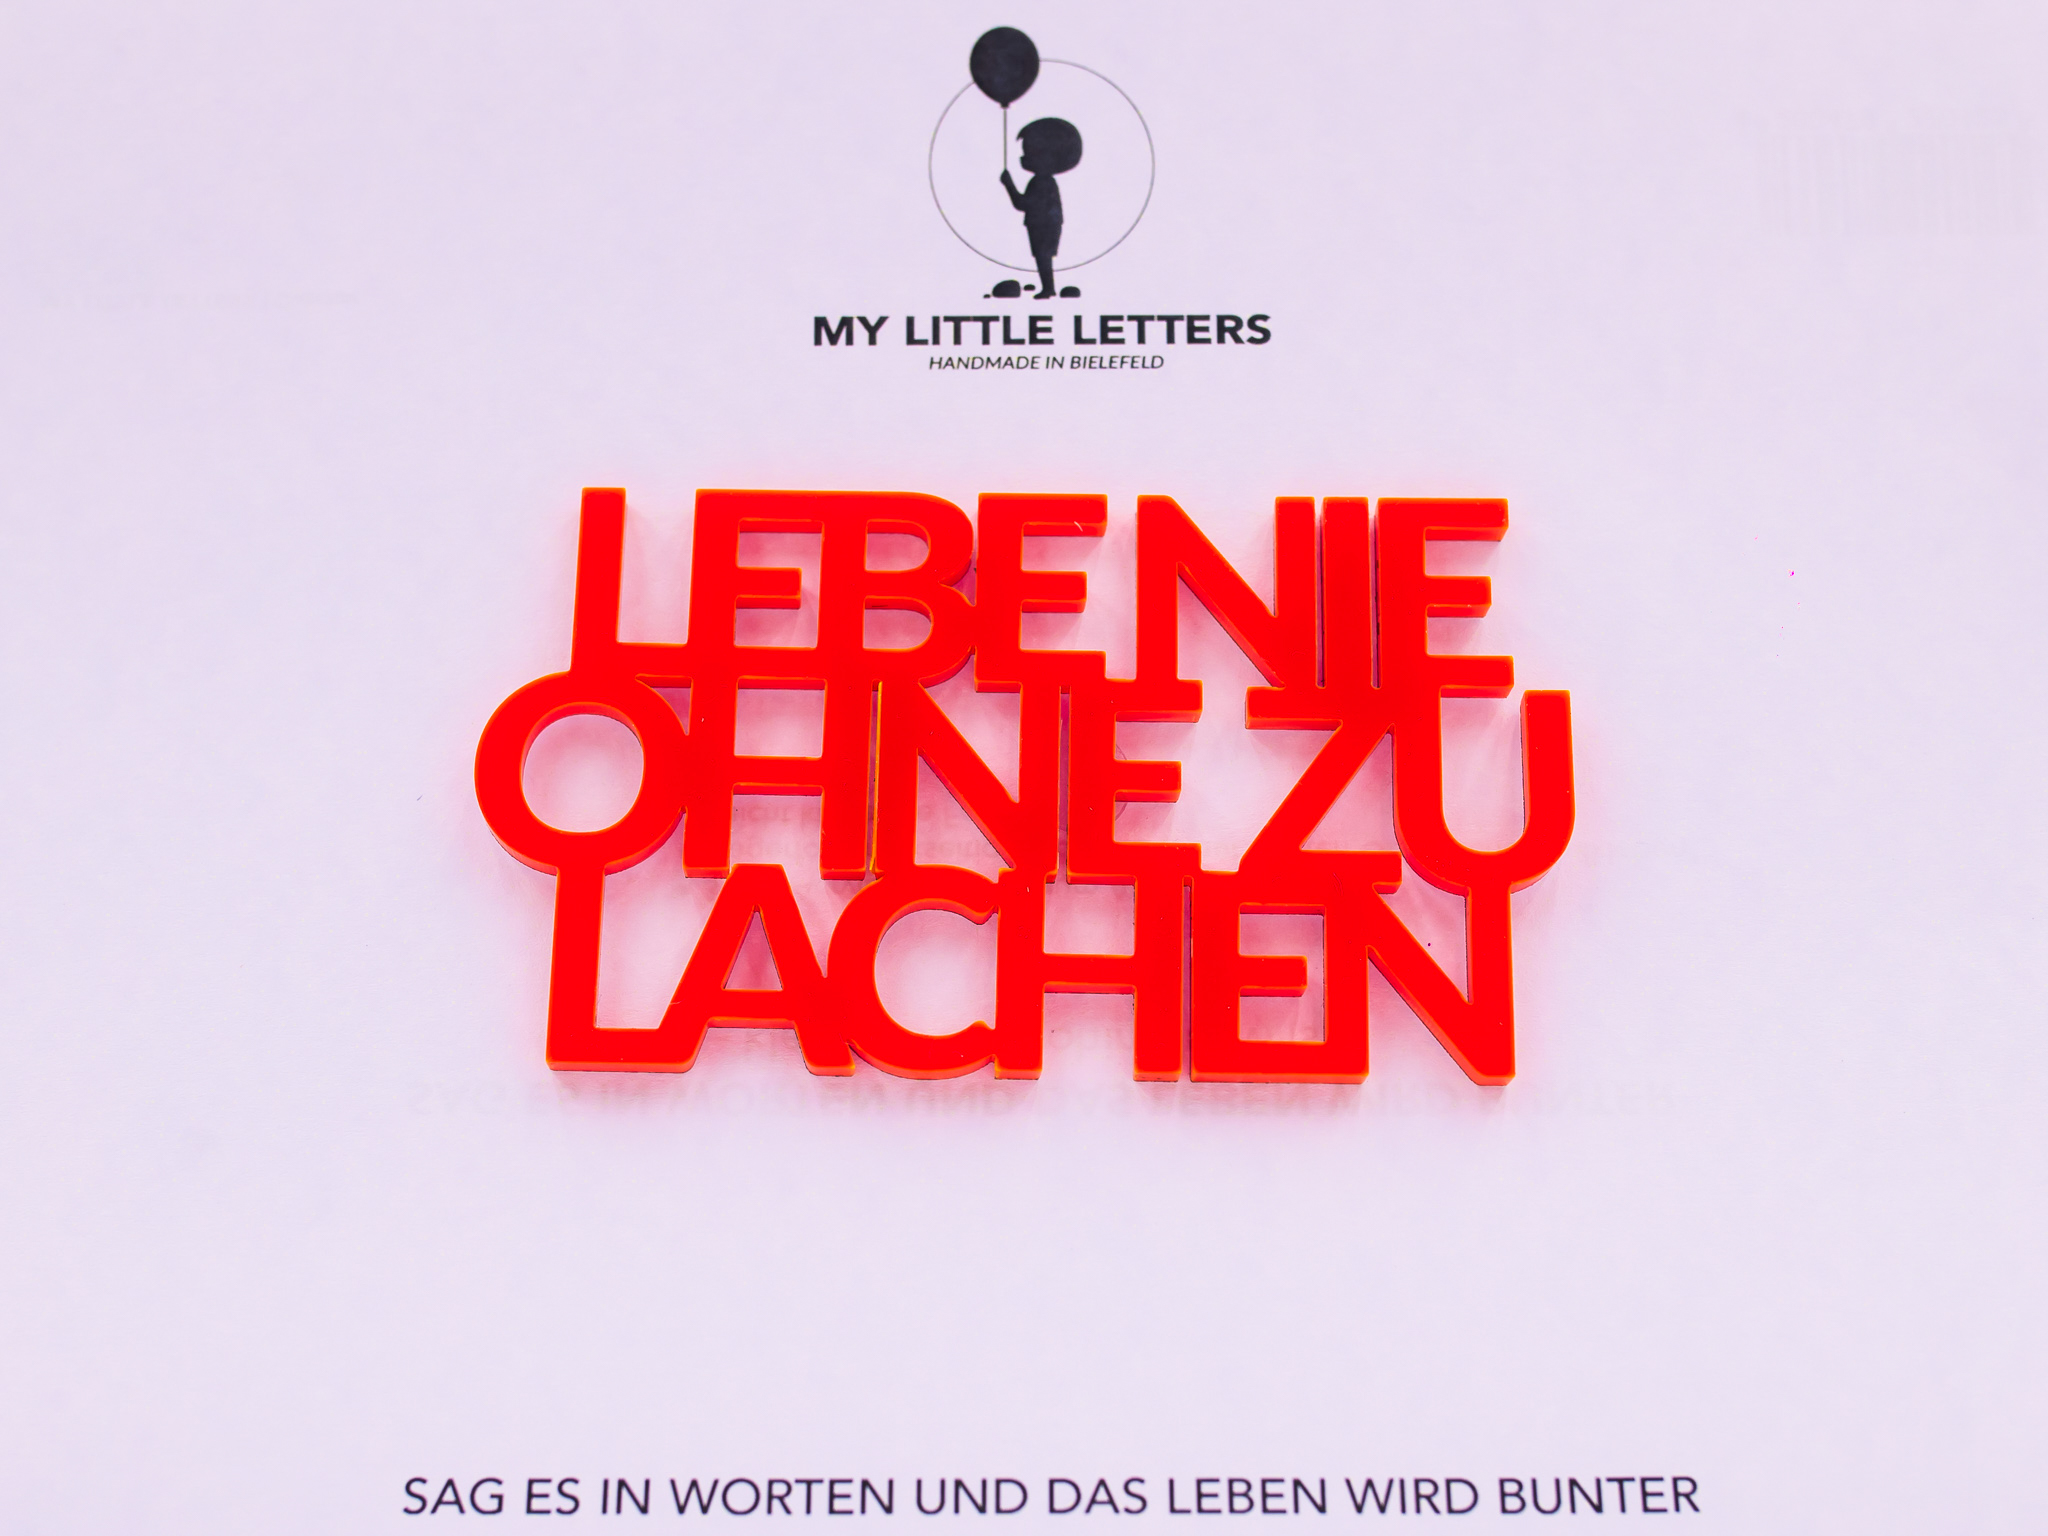 Little Letters - LEBE NIE OHNE ZU LACHEN